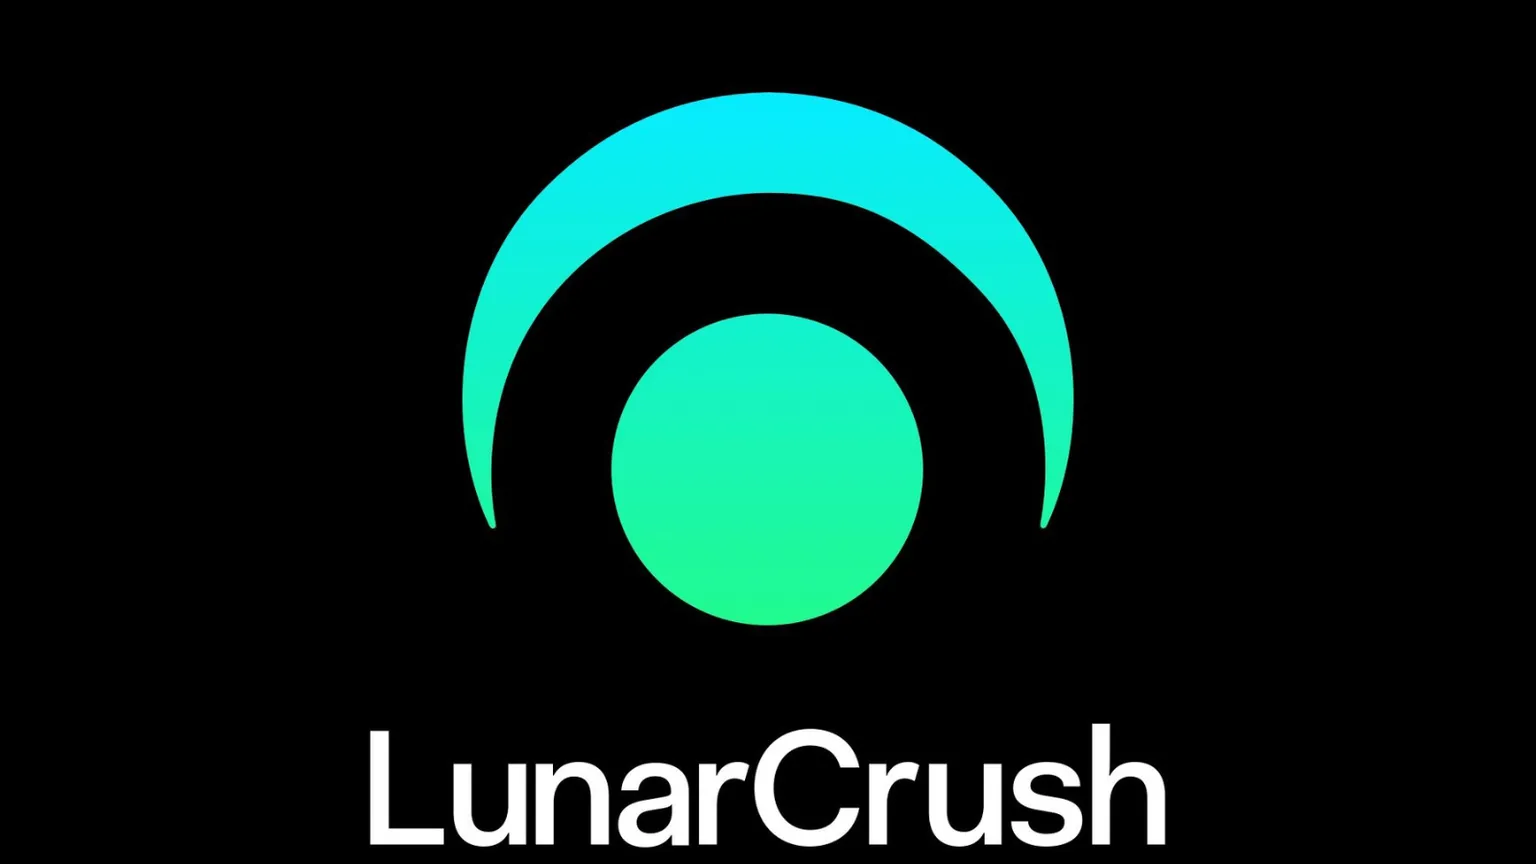 Image: LunarCrush